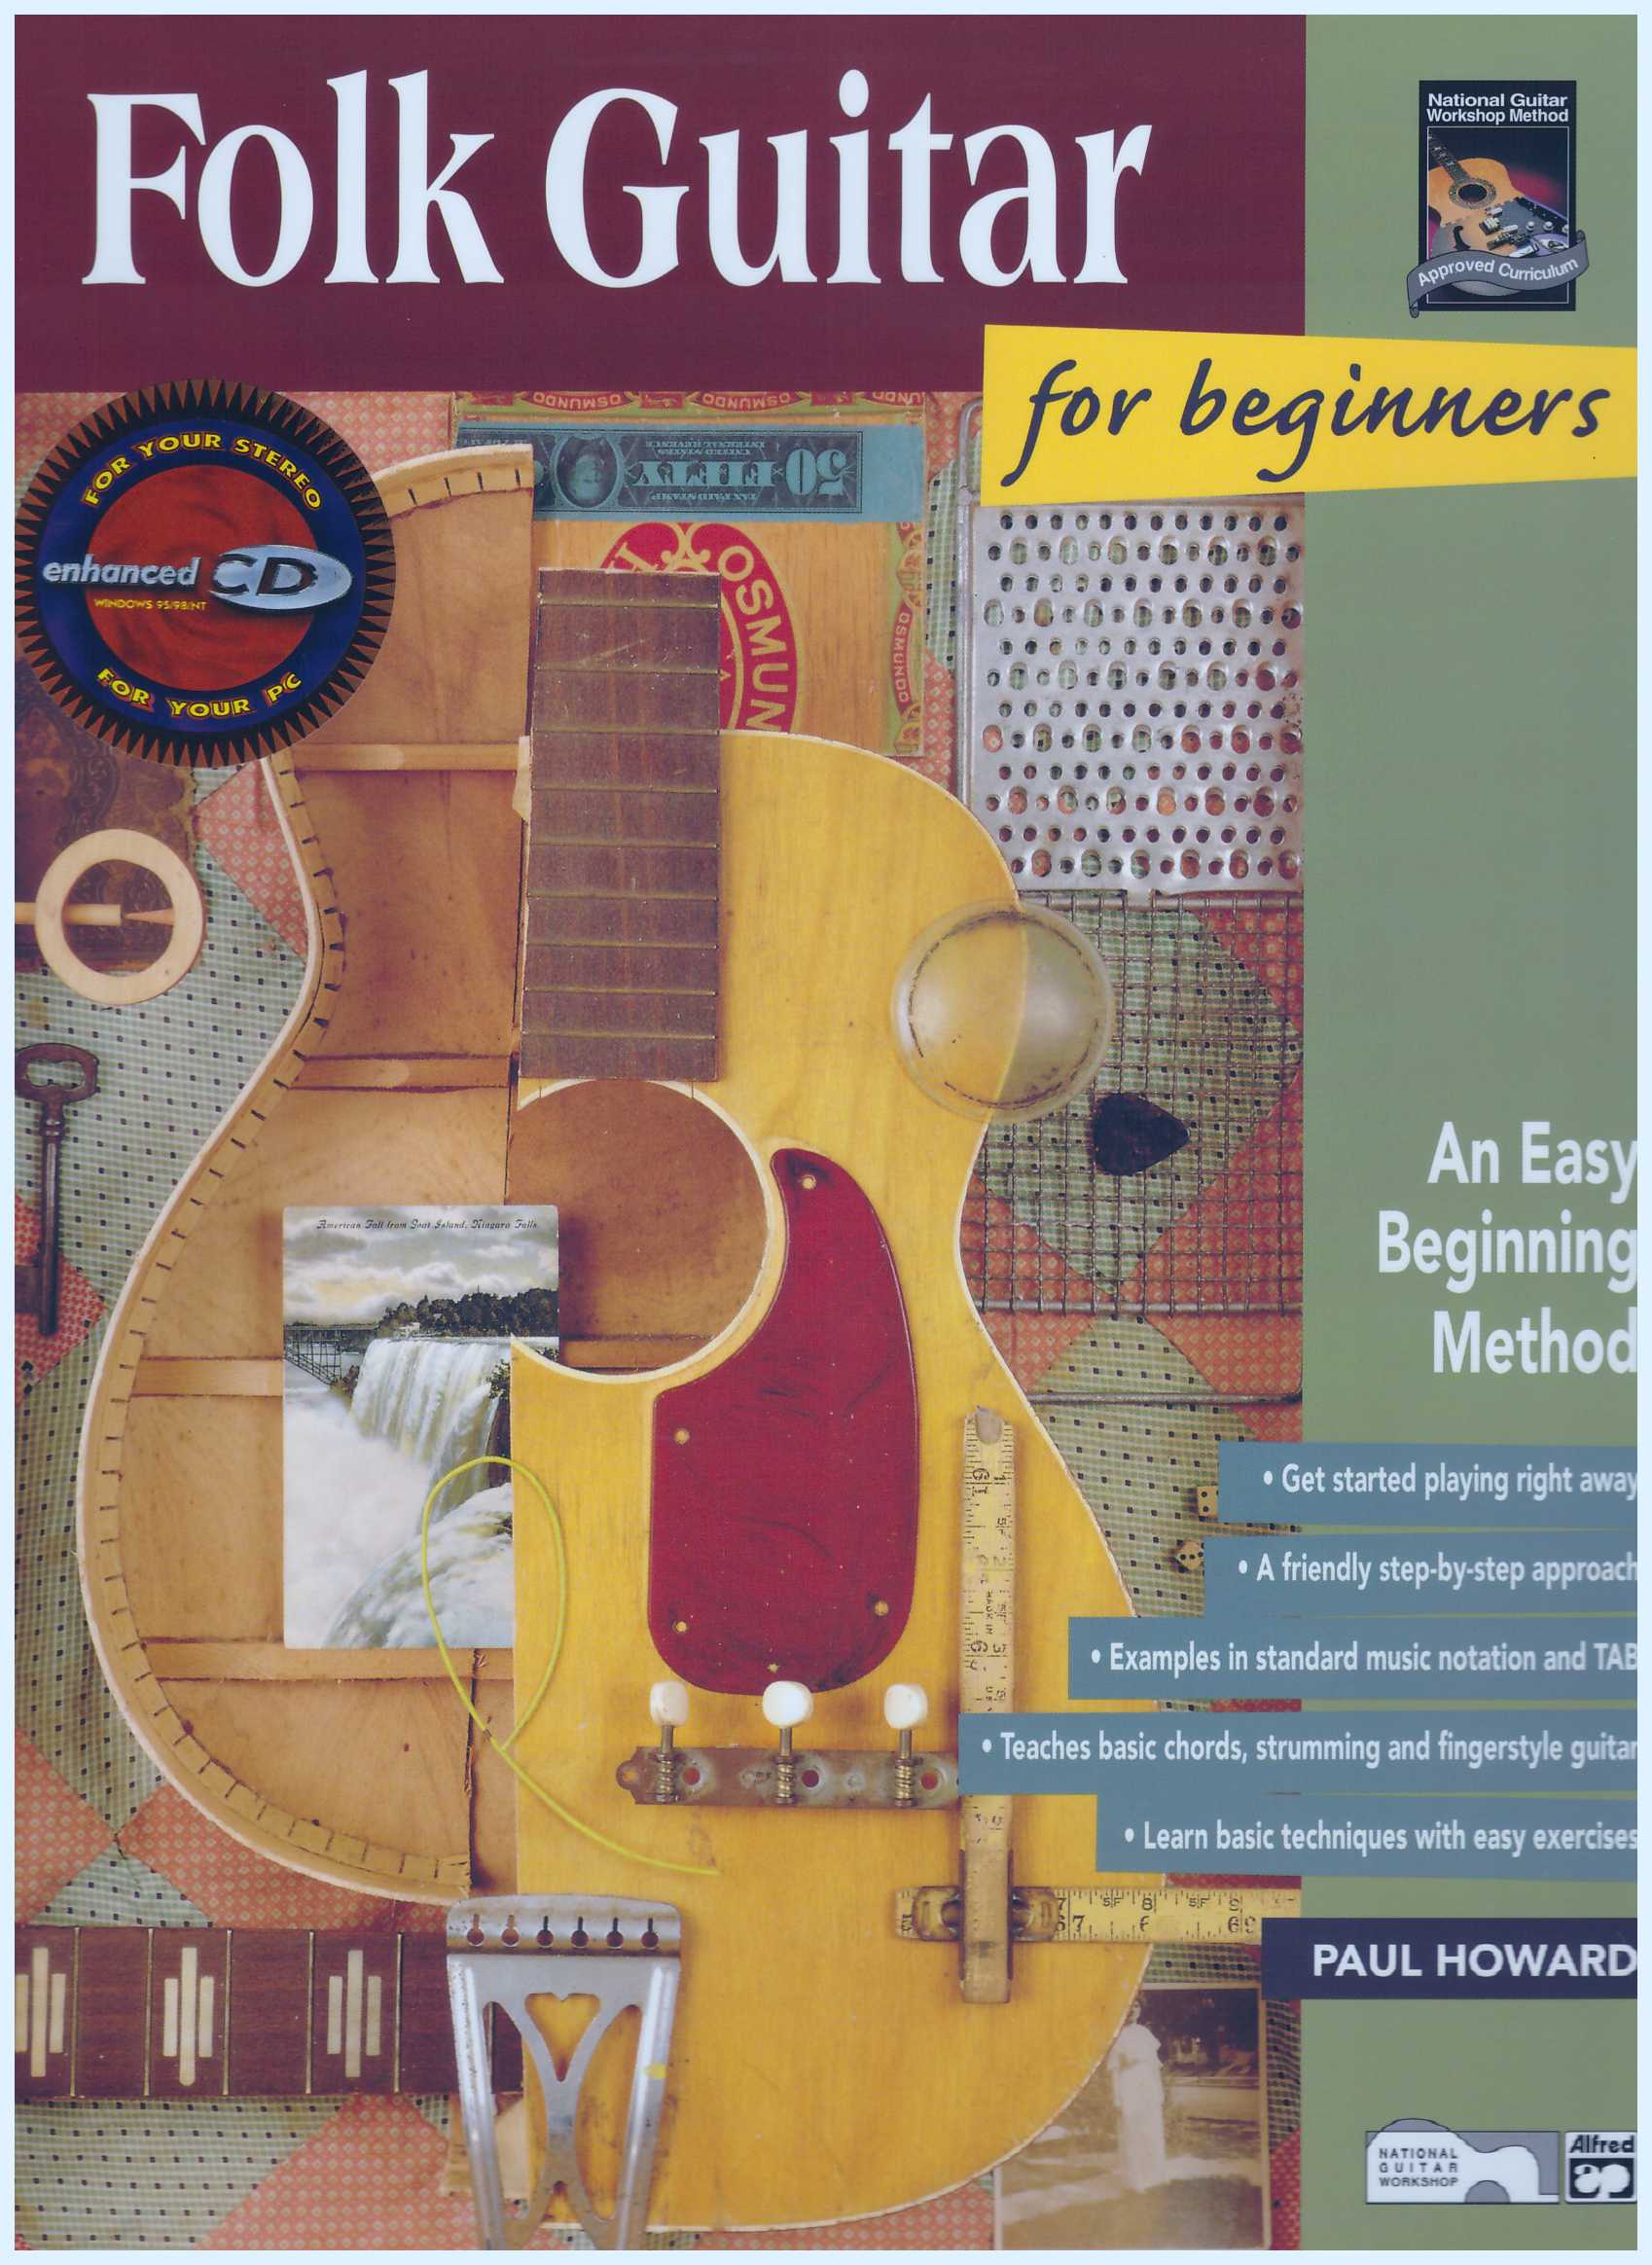 Folk Guitar For Beginners / Folk Guitar / Gitar Book / Folk Gitar / Self Learning Book / Music Book